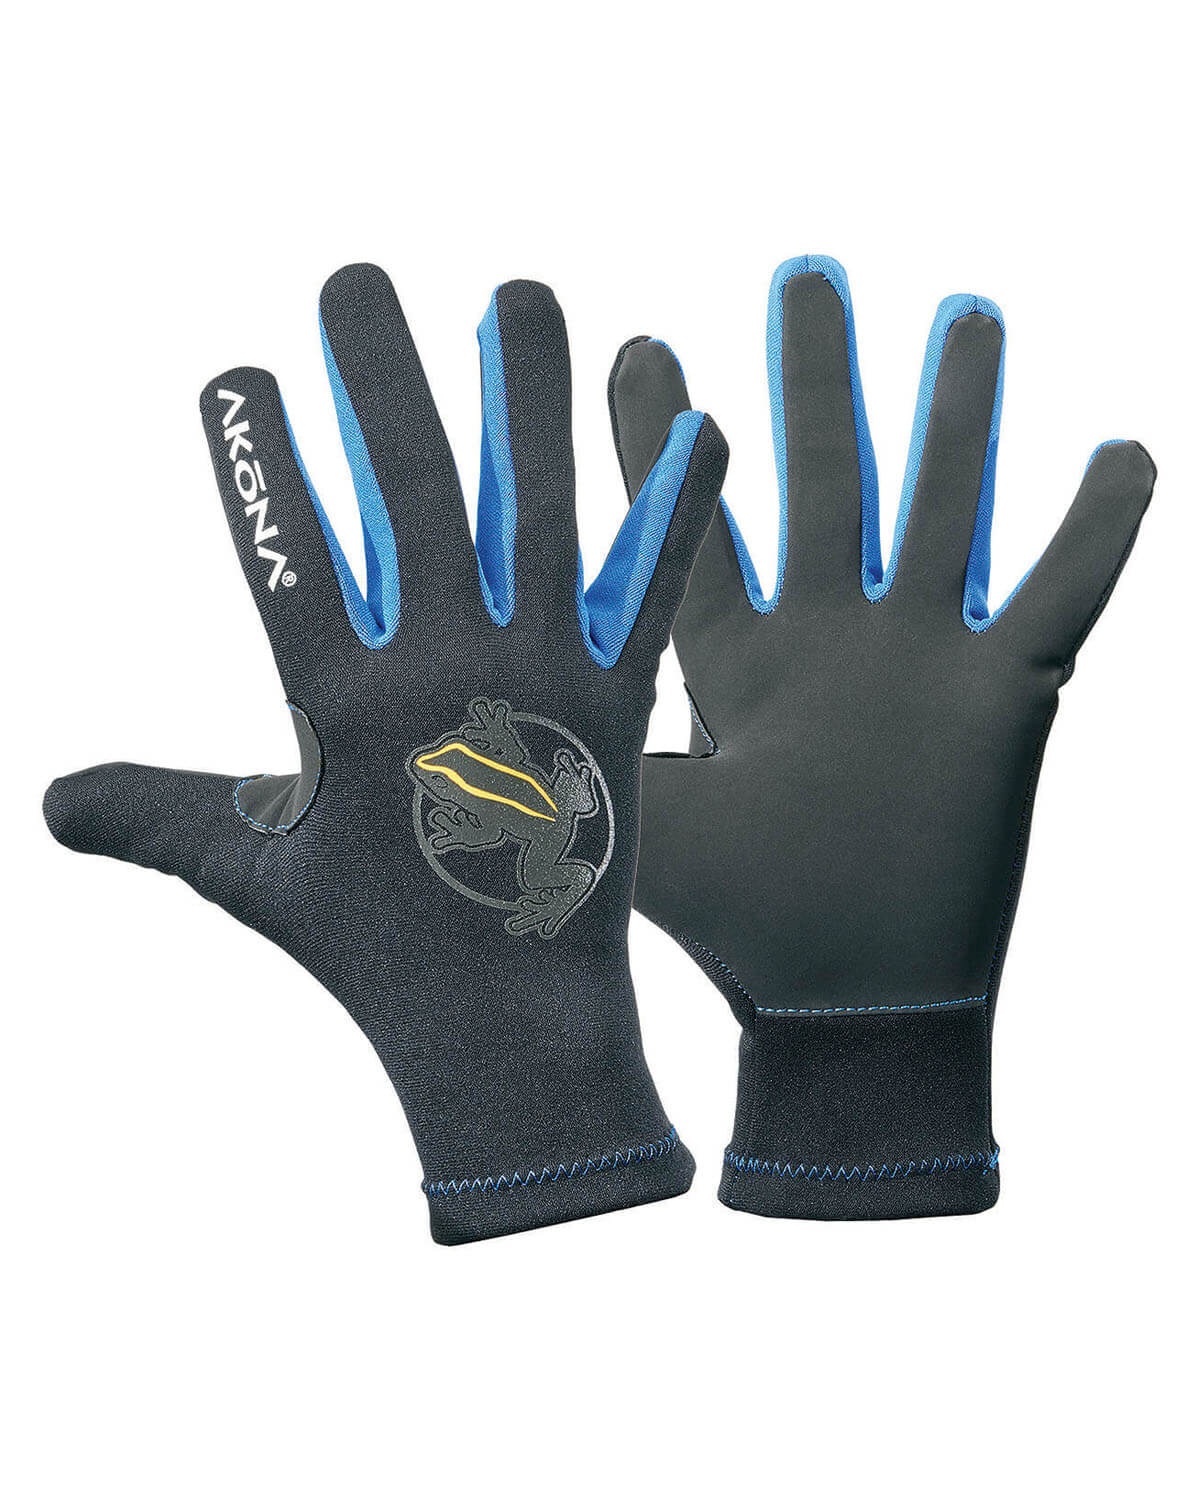 0.5mm AKONA Reef Gloves